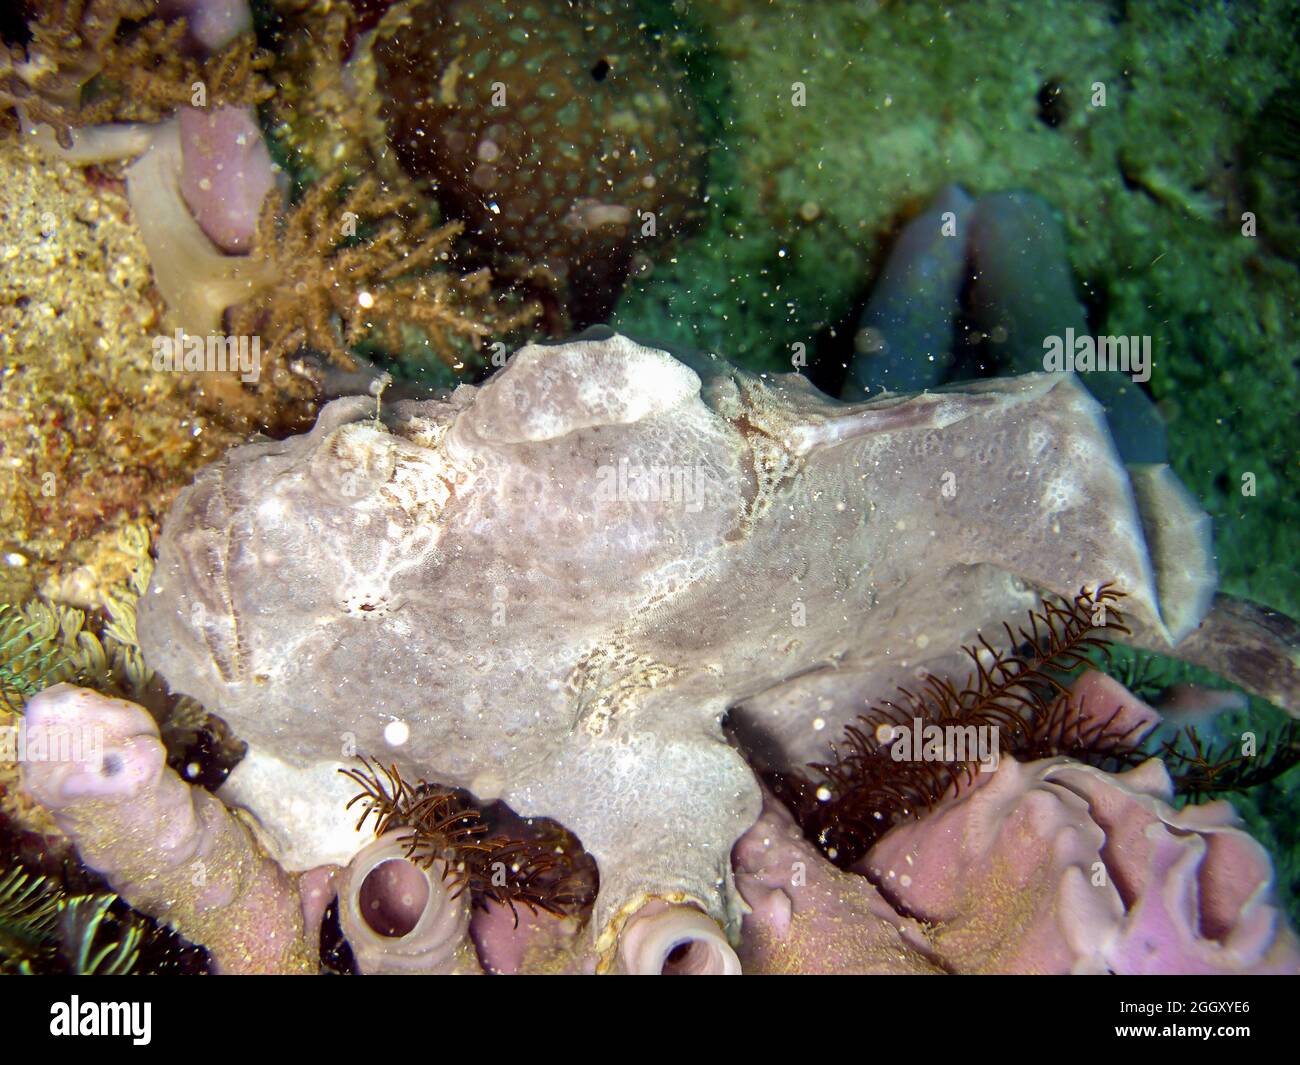 Frogfish (Antennarius) is swimming in the filipino sea 4.2.2012 Stock Photo